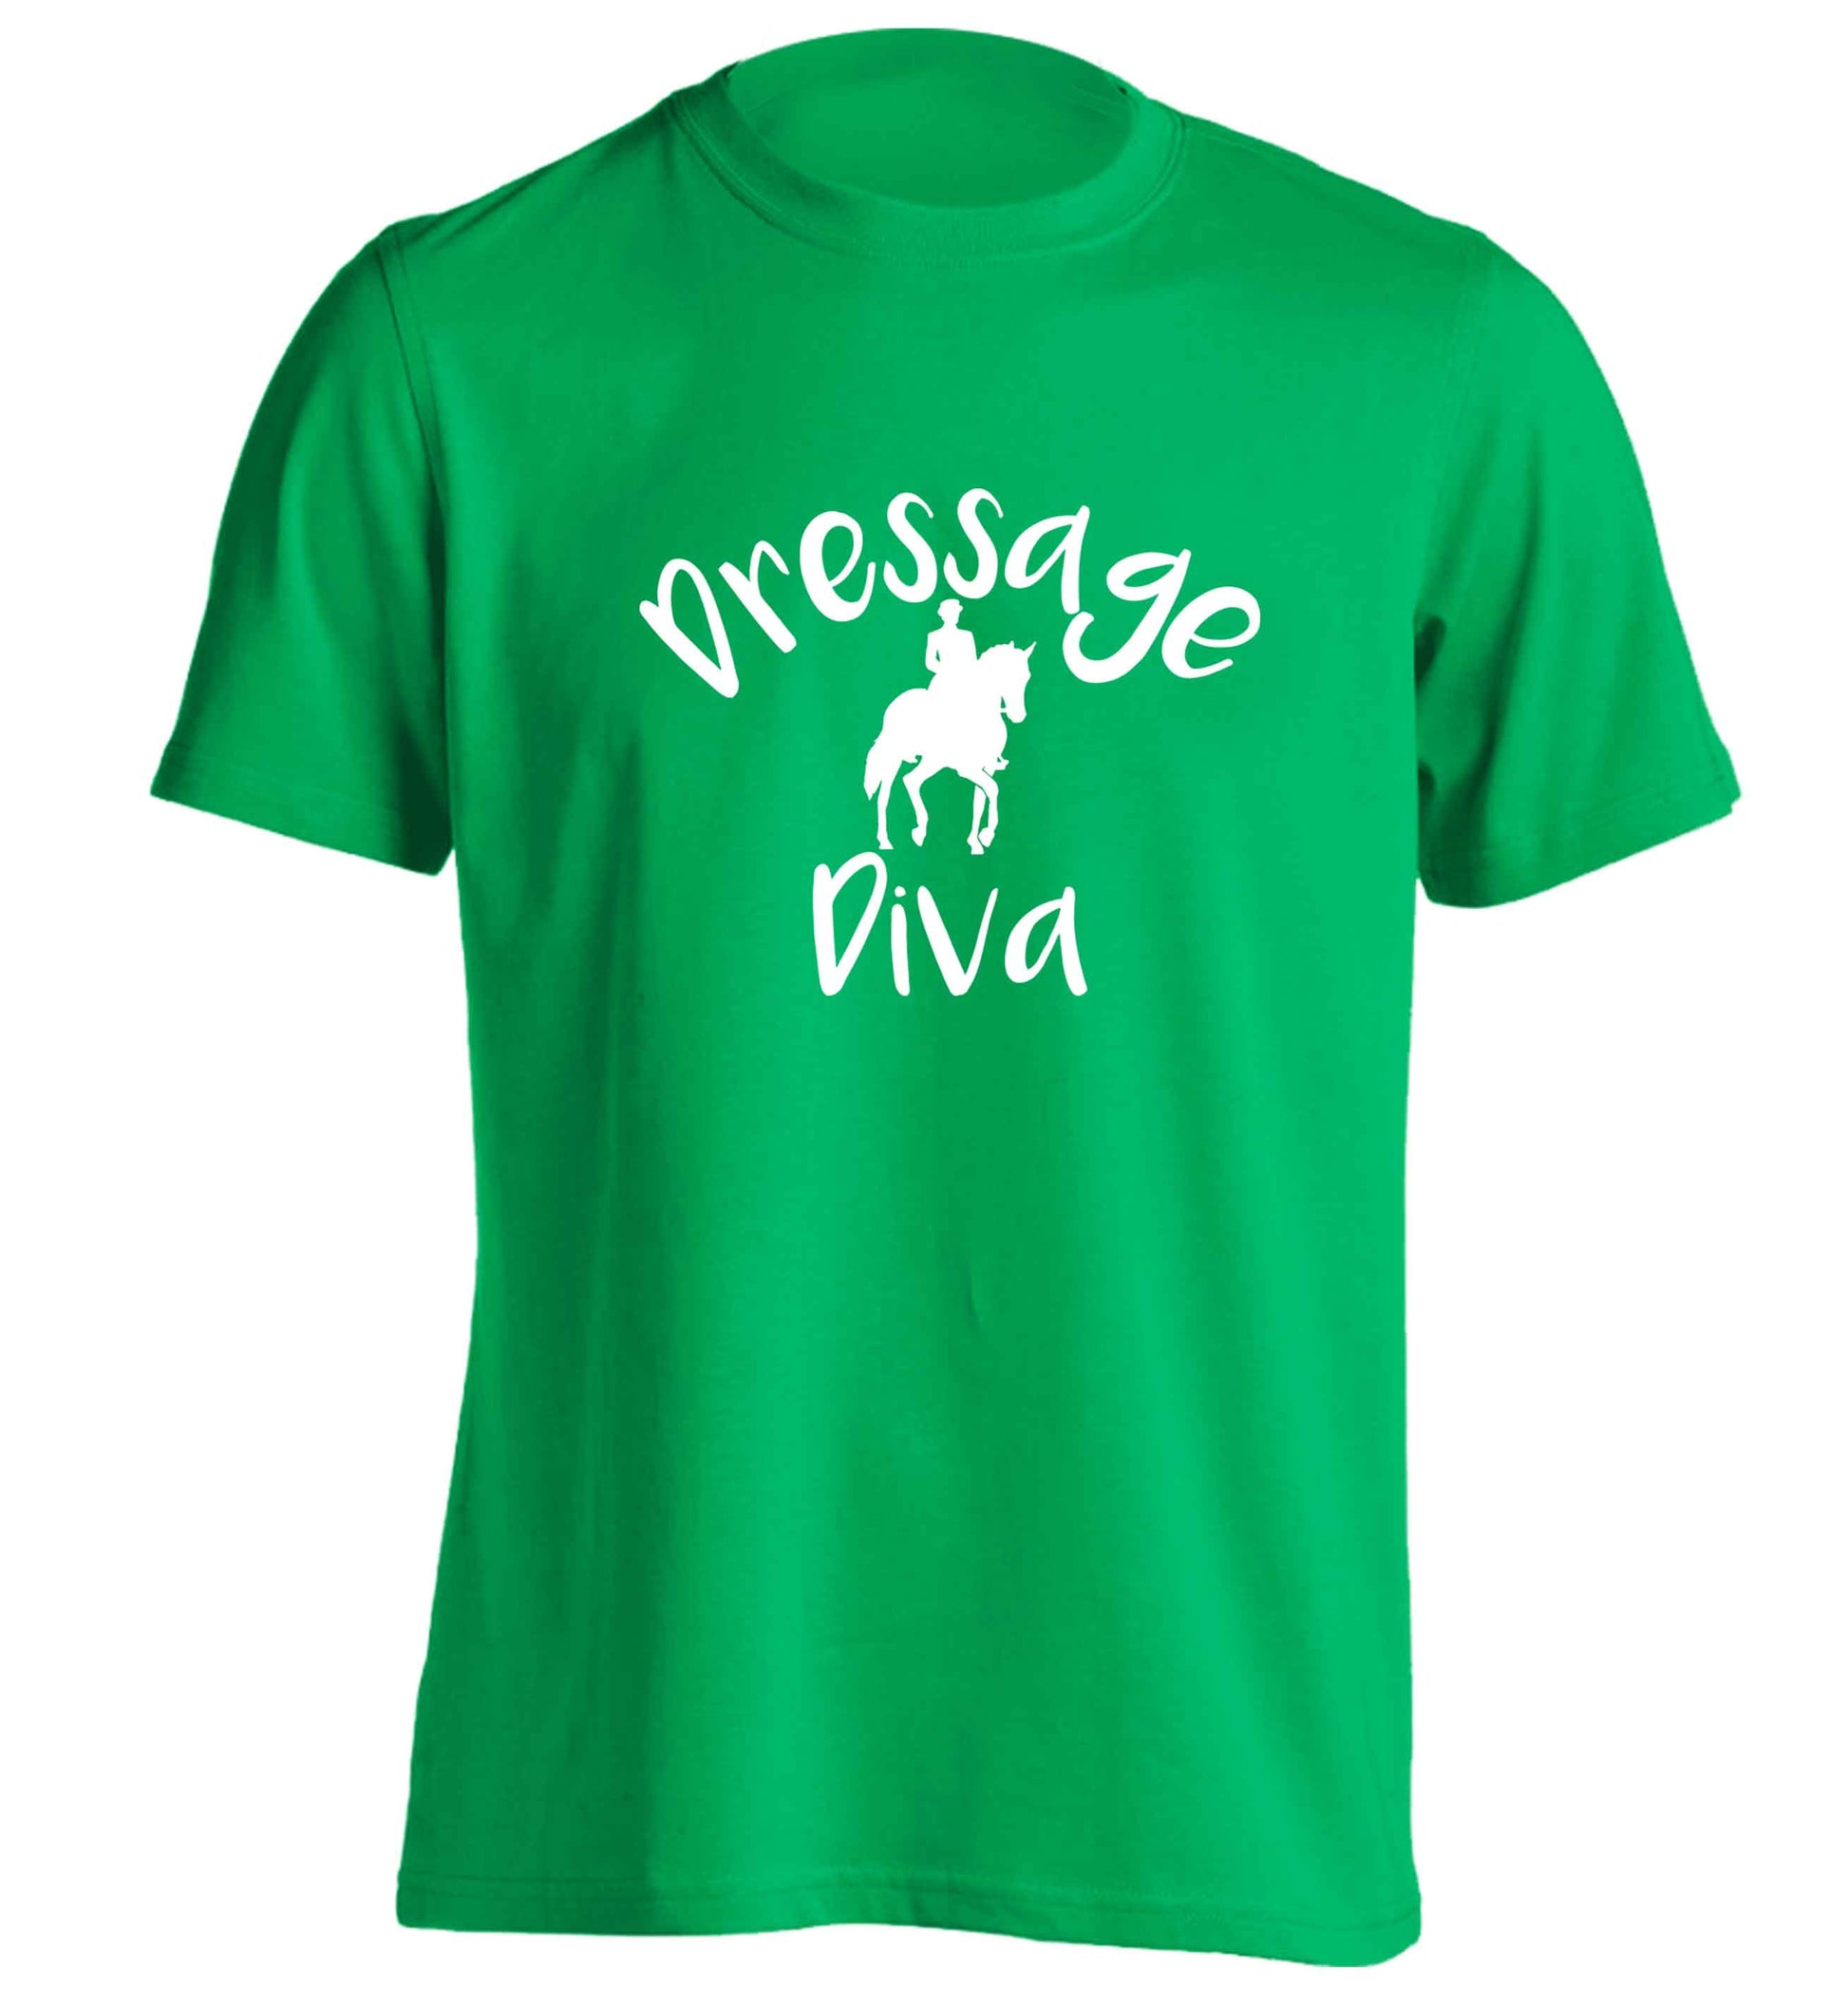 Dressage diva adults unisex green Tshirt 2XL